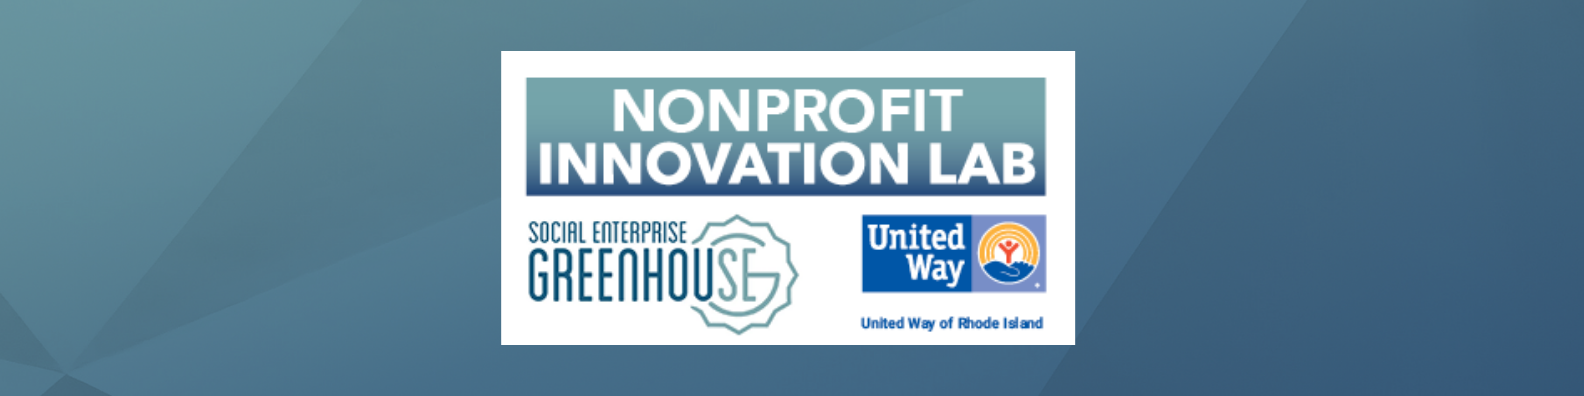 Nonprofit Innovation Lab Logo